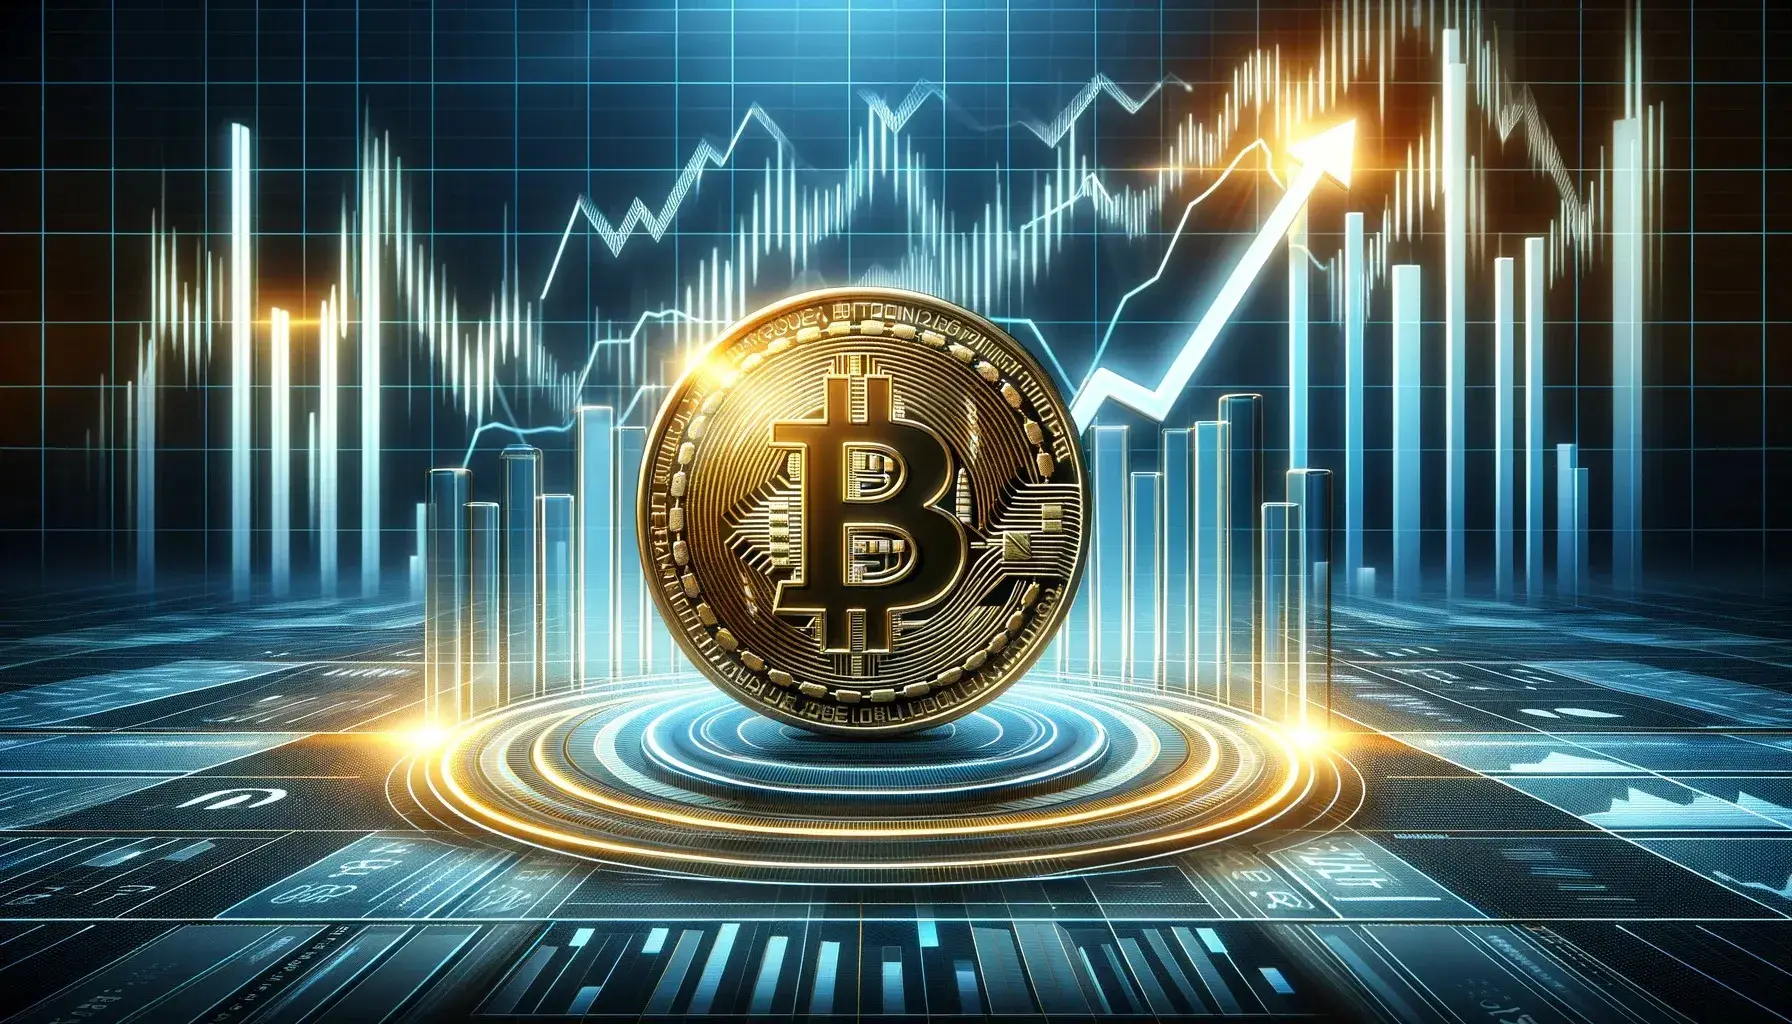 Mike Novogratz Discusses Bitcoin's Trajectory in Exclusive CNBC Interview